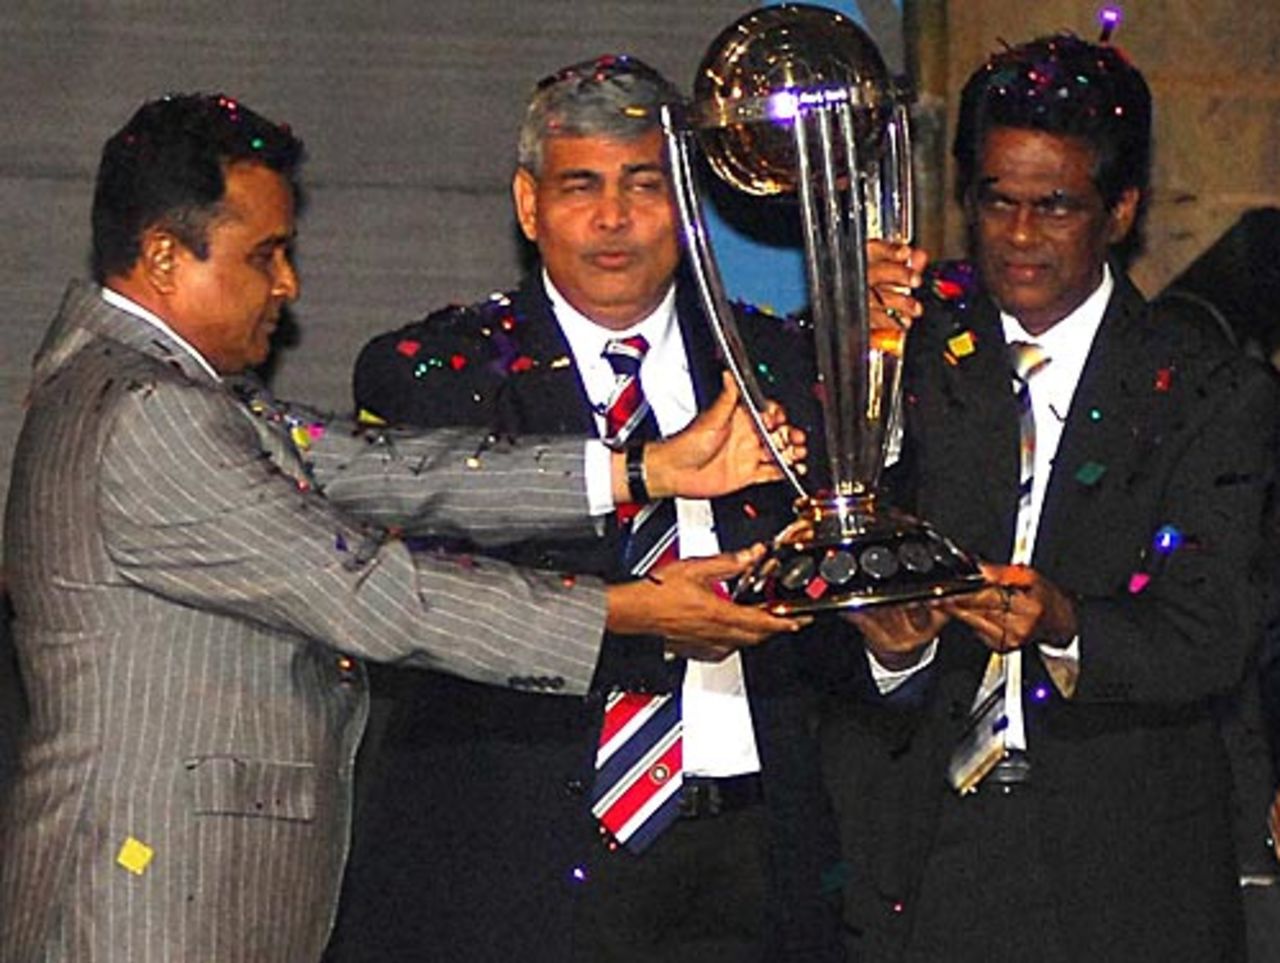 Bangladesh Cricket Board president Mostafa Kamal, the BCCI president Shashank Manohar and the Sri Lanka Cricket chairman D.S de Silva hold aloft the 2011 World Cup trophy, Dhaka, January 9, 2010